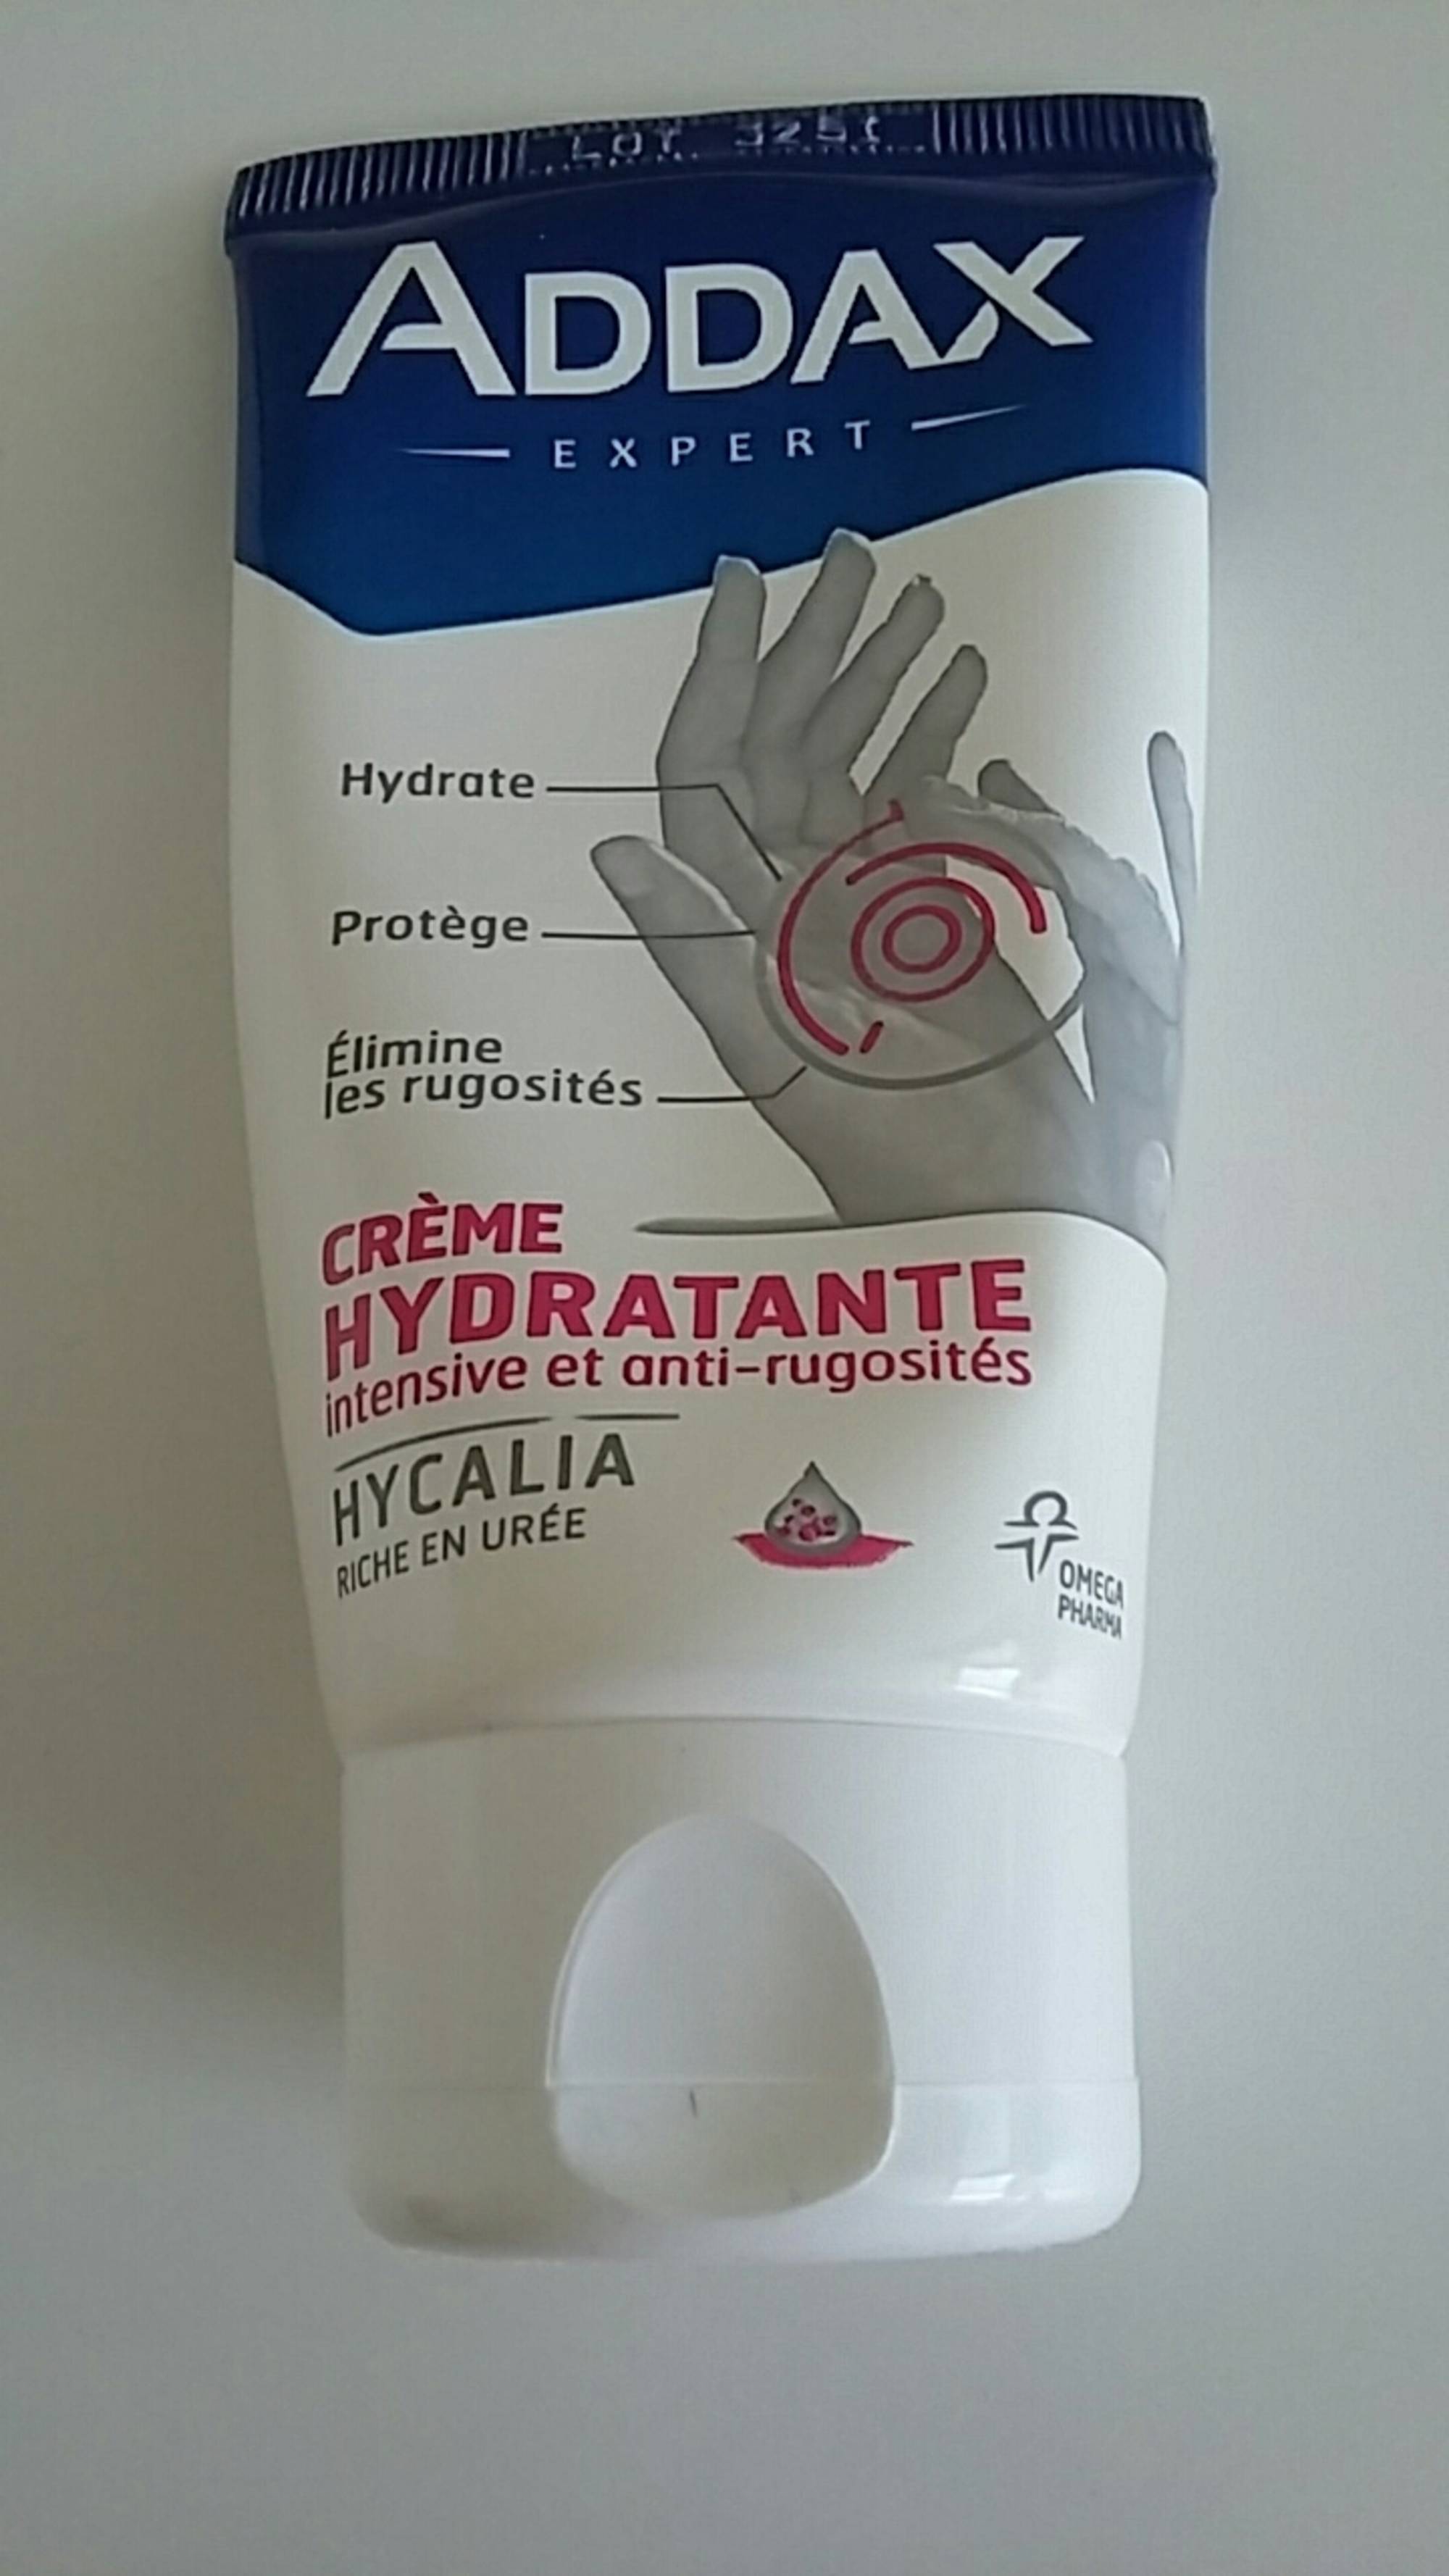 ADDAX - Hycalia - Crème hydratante et anti-rugosités